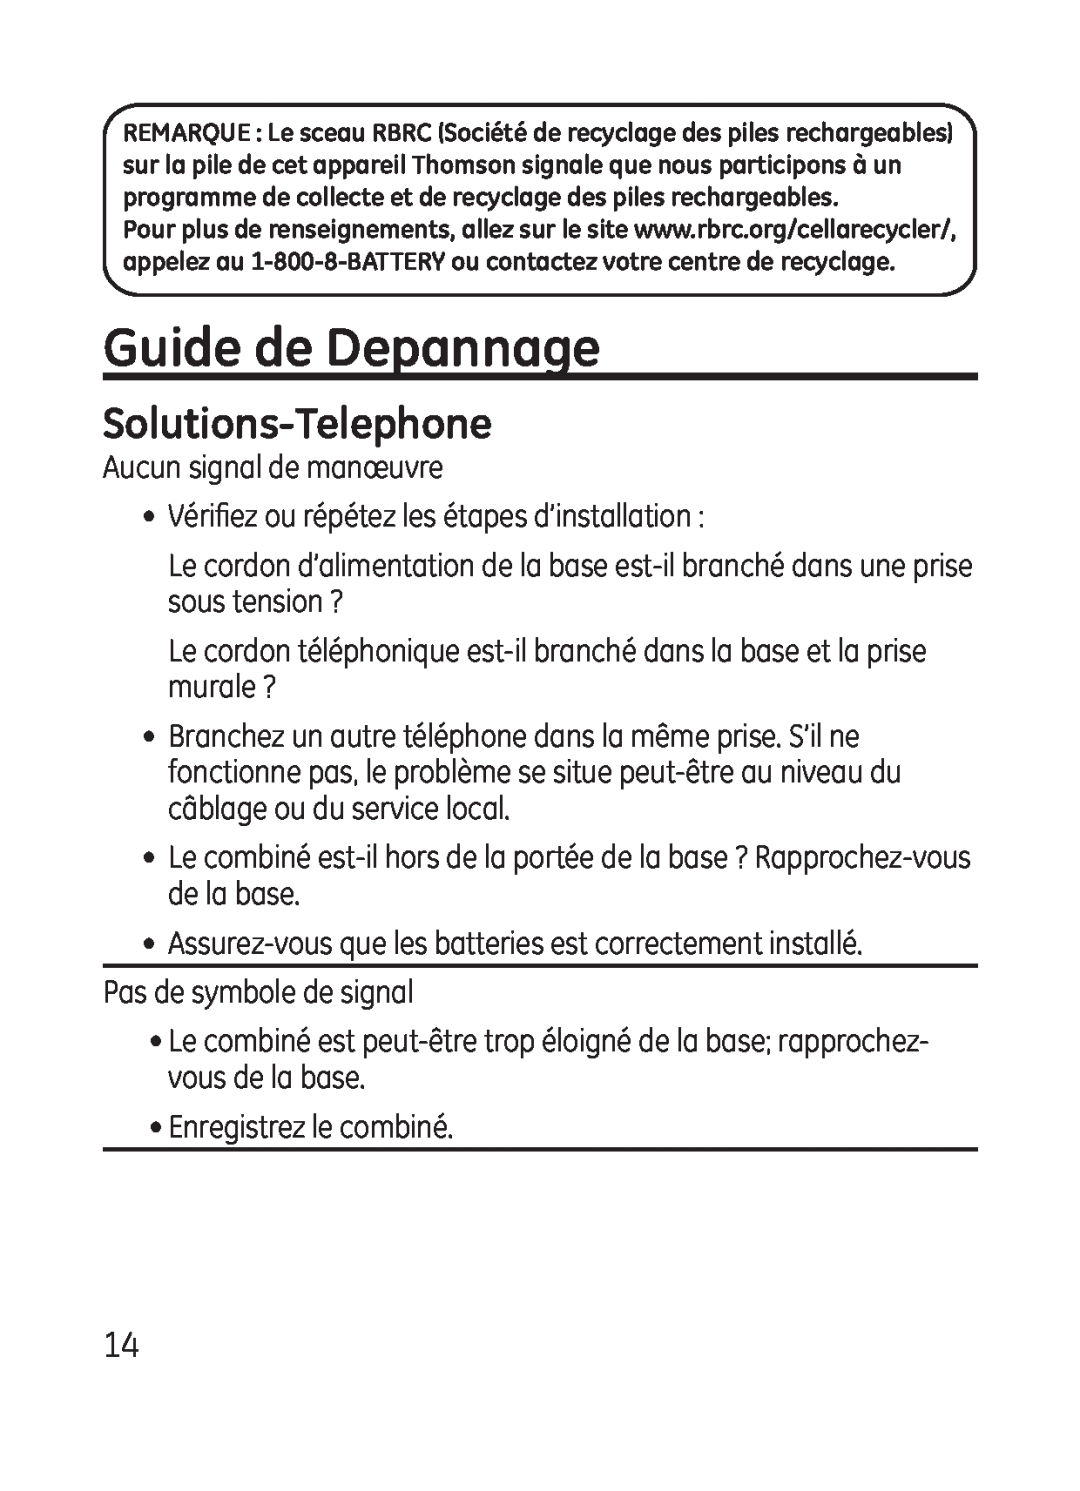 GE 28301 manual Guide de Depannage, Solutions-Telephone 